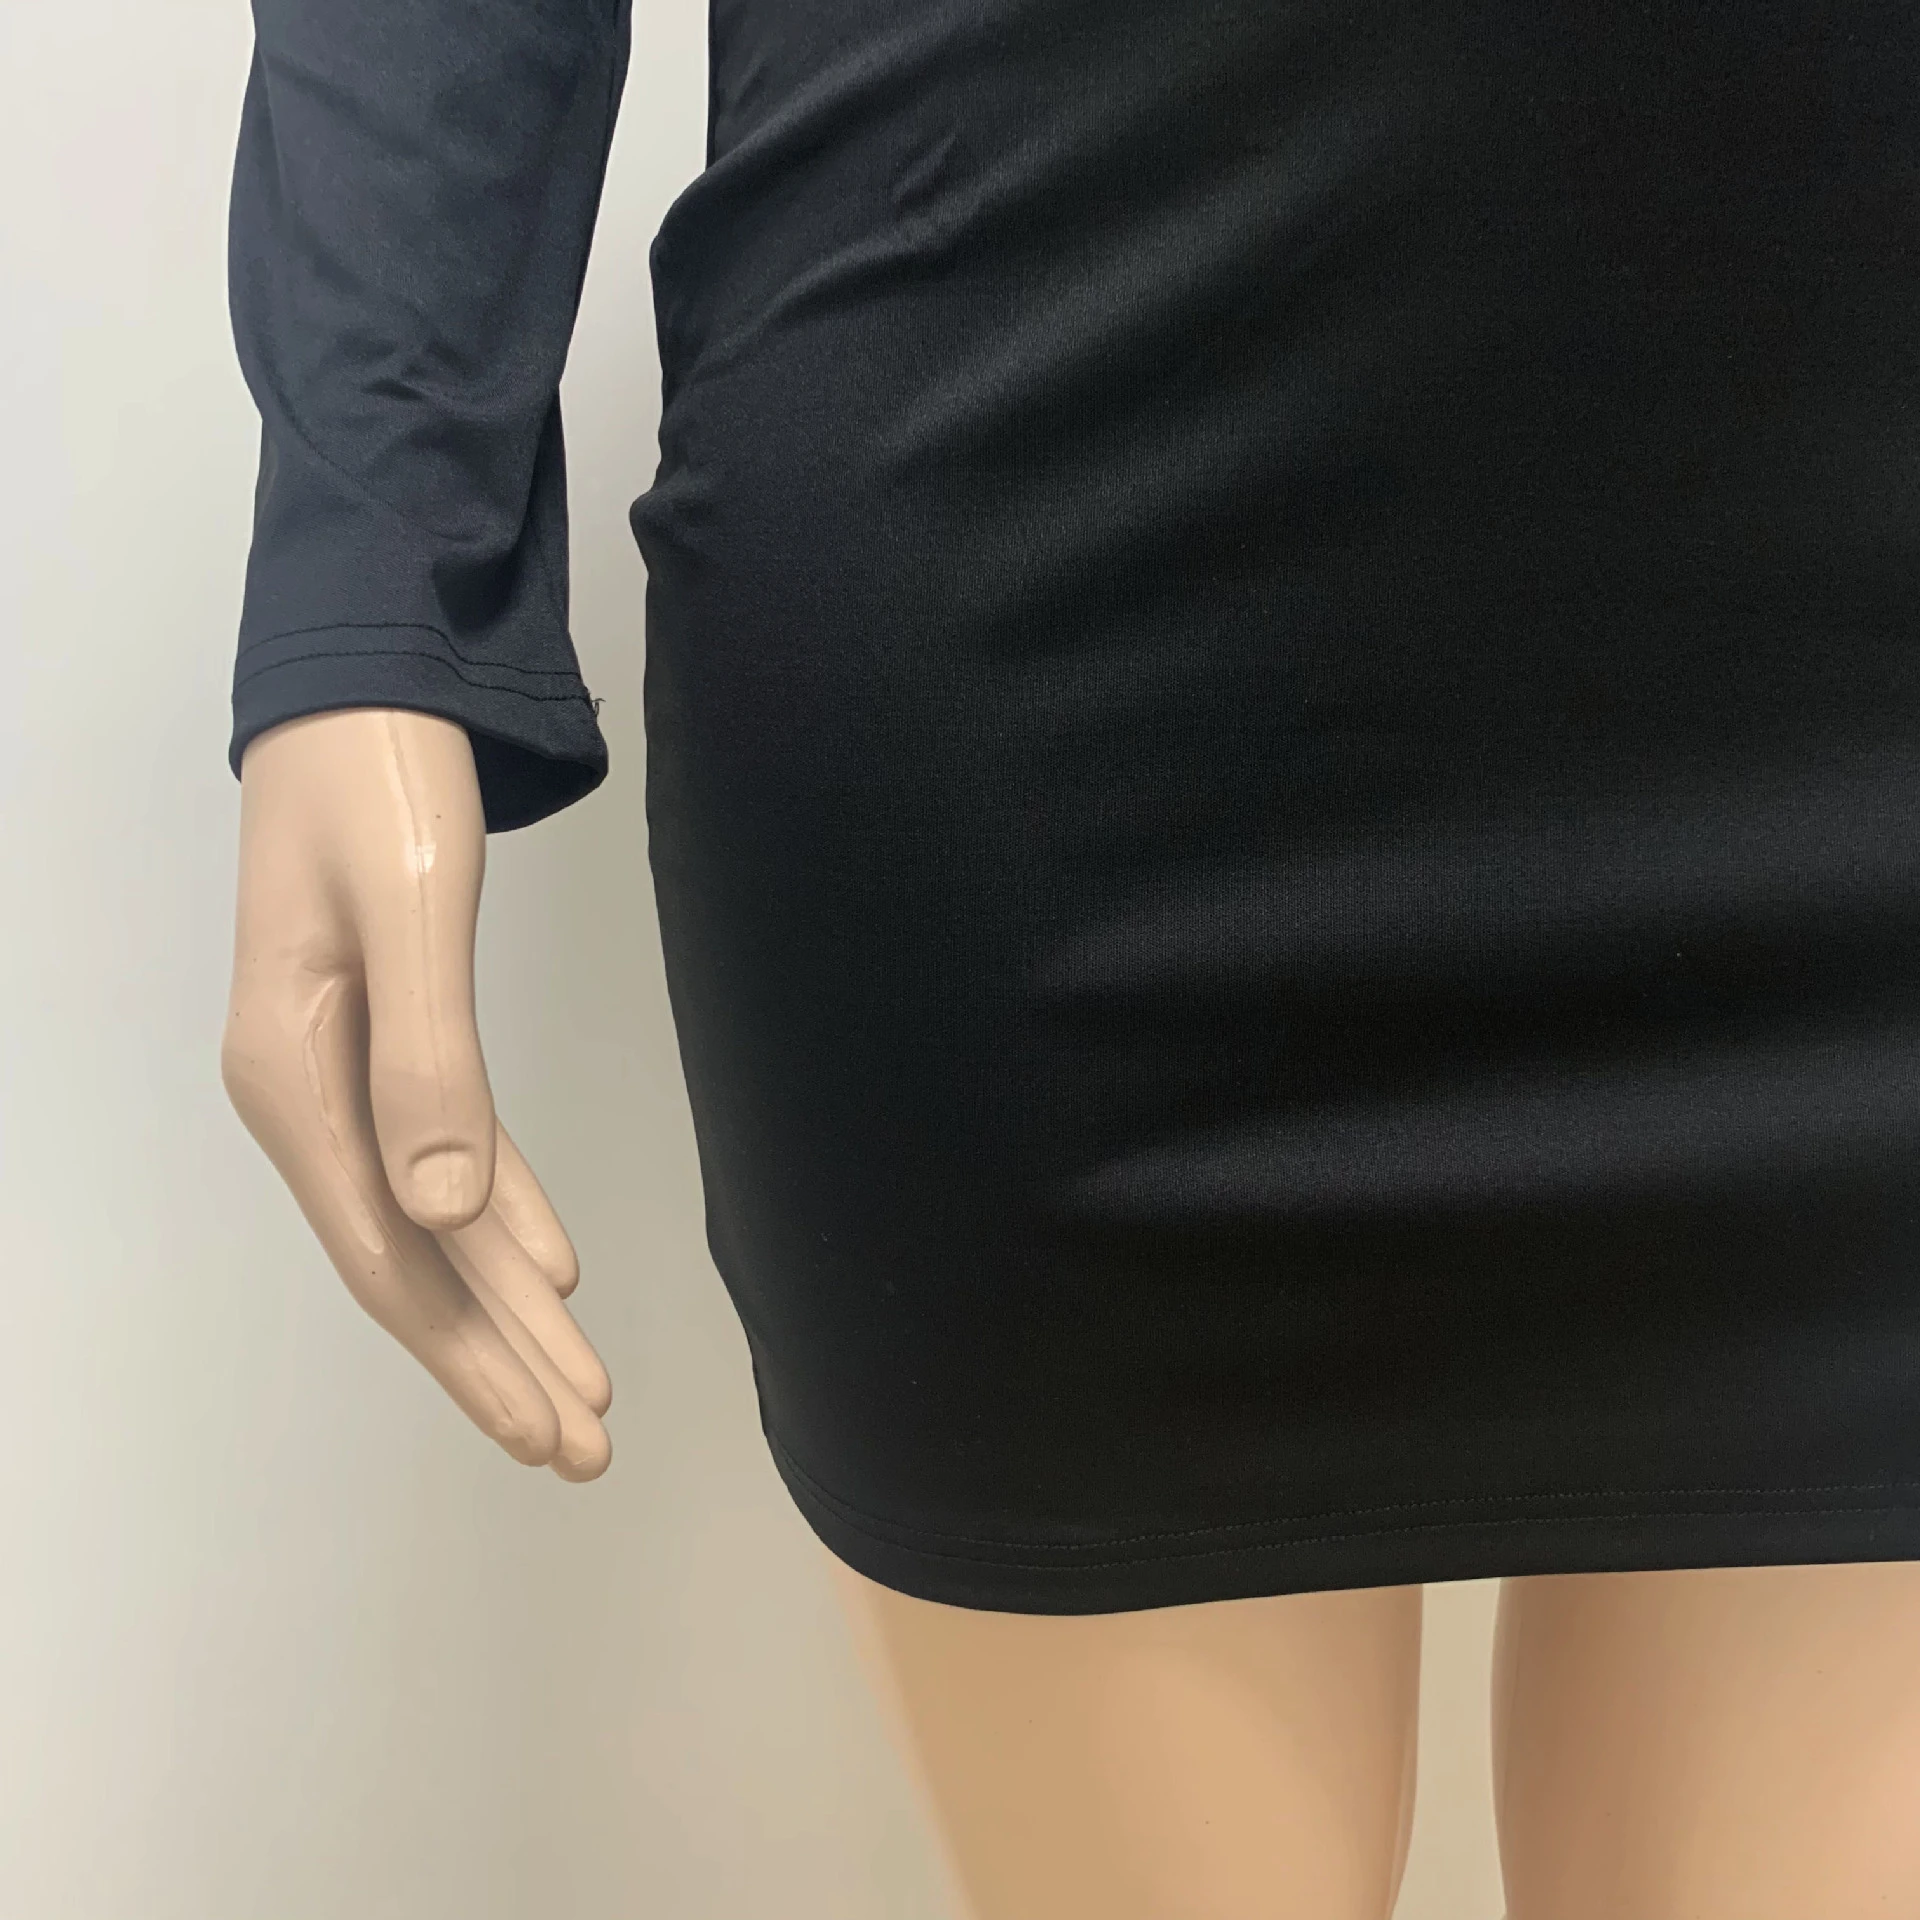 sequined plus size dress bodycon dress manufacturer